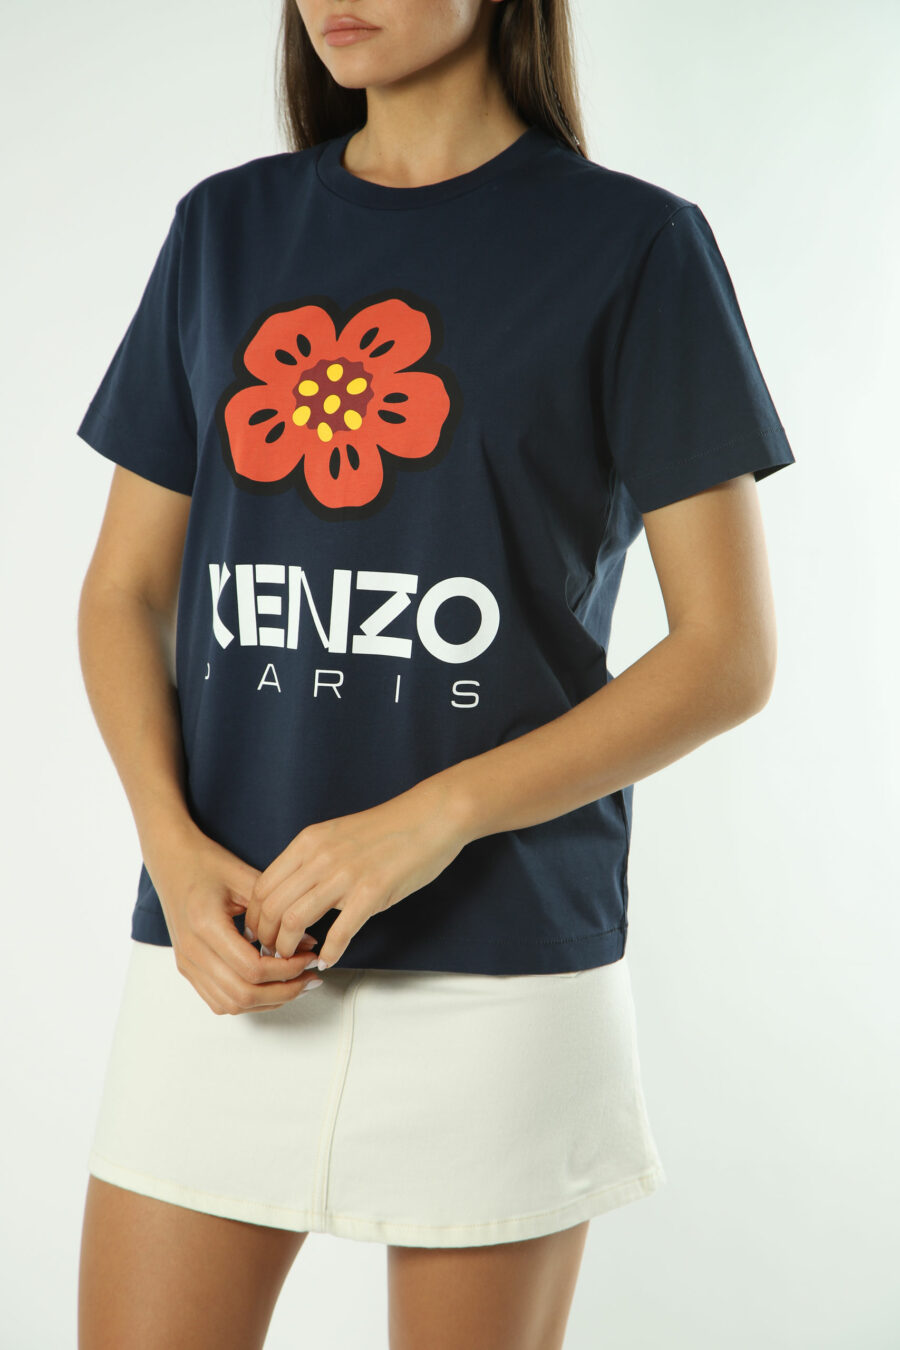 T-shirt azul com maxilogo de flores laranja - Fotos 1398